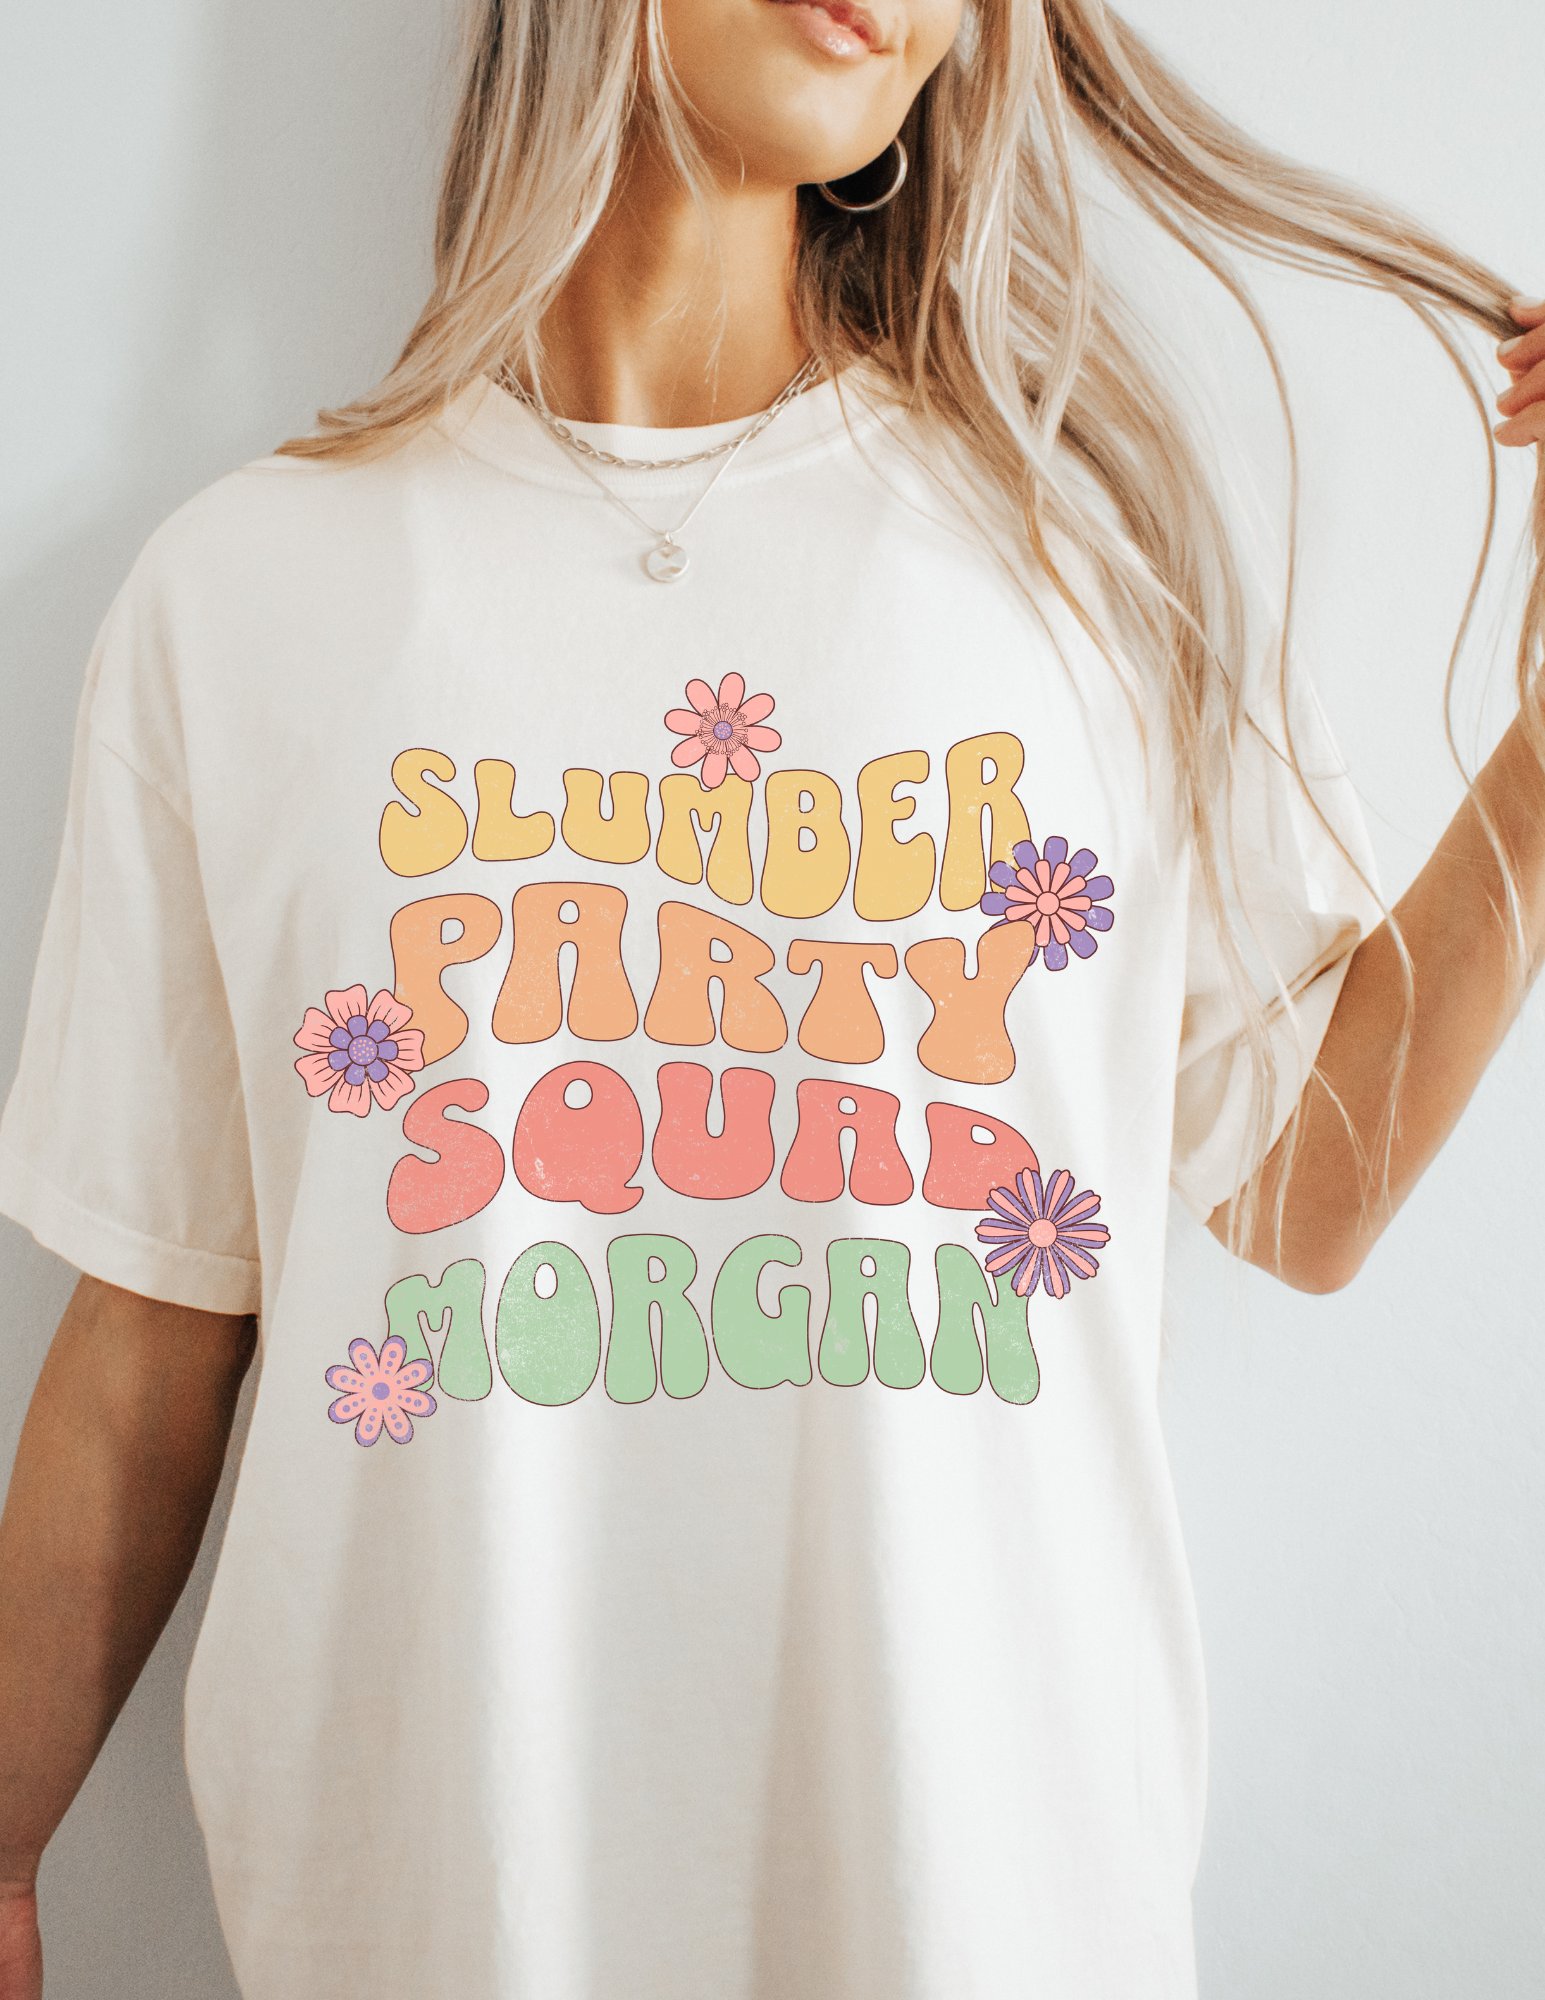 Slumber Party Squad Shirt- Comfort Colors